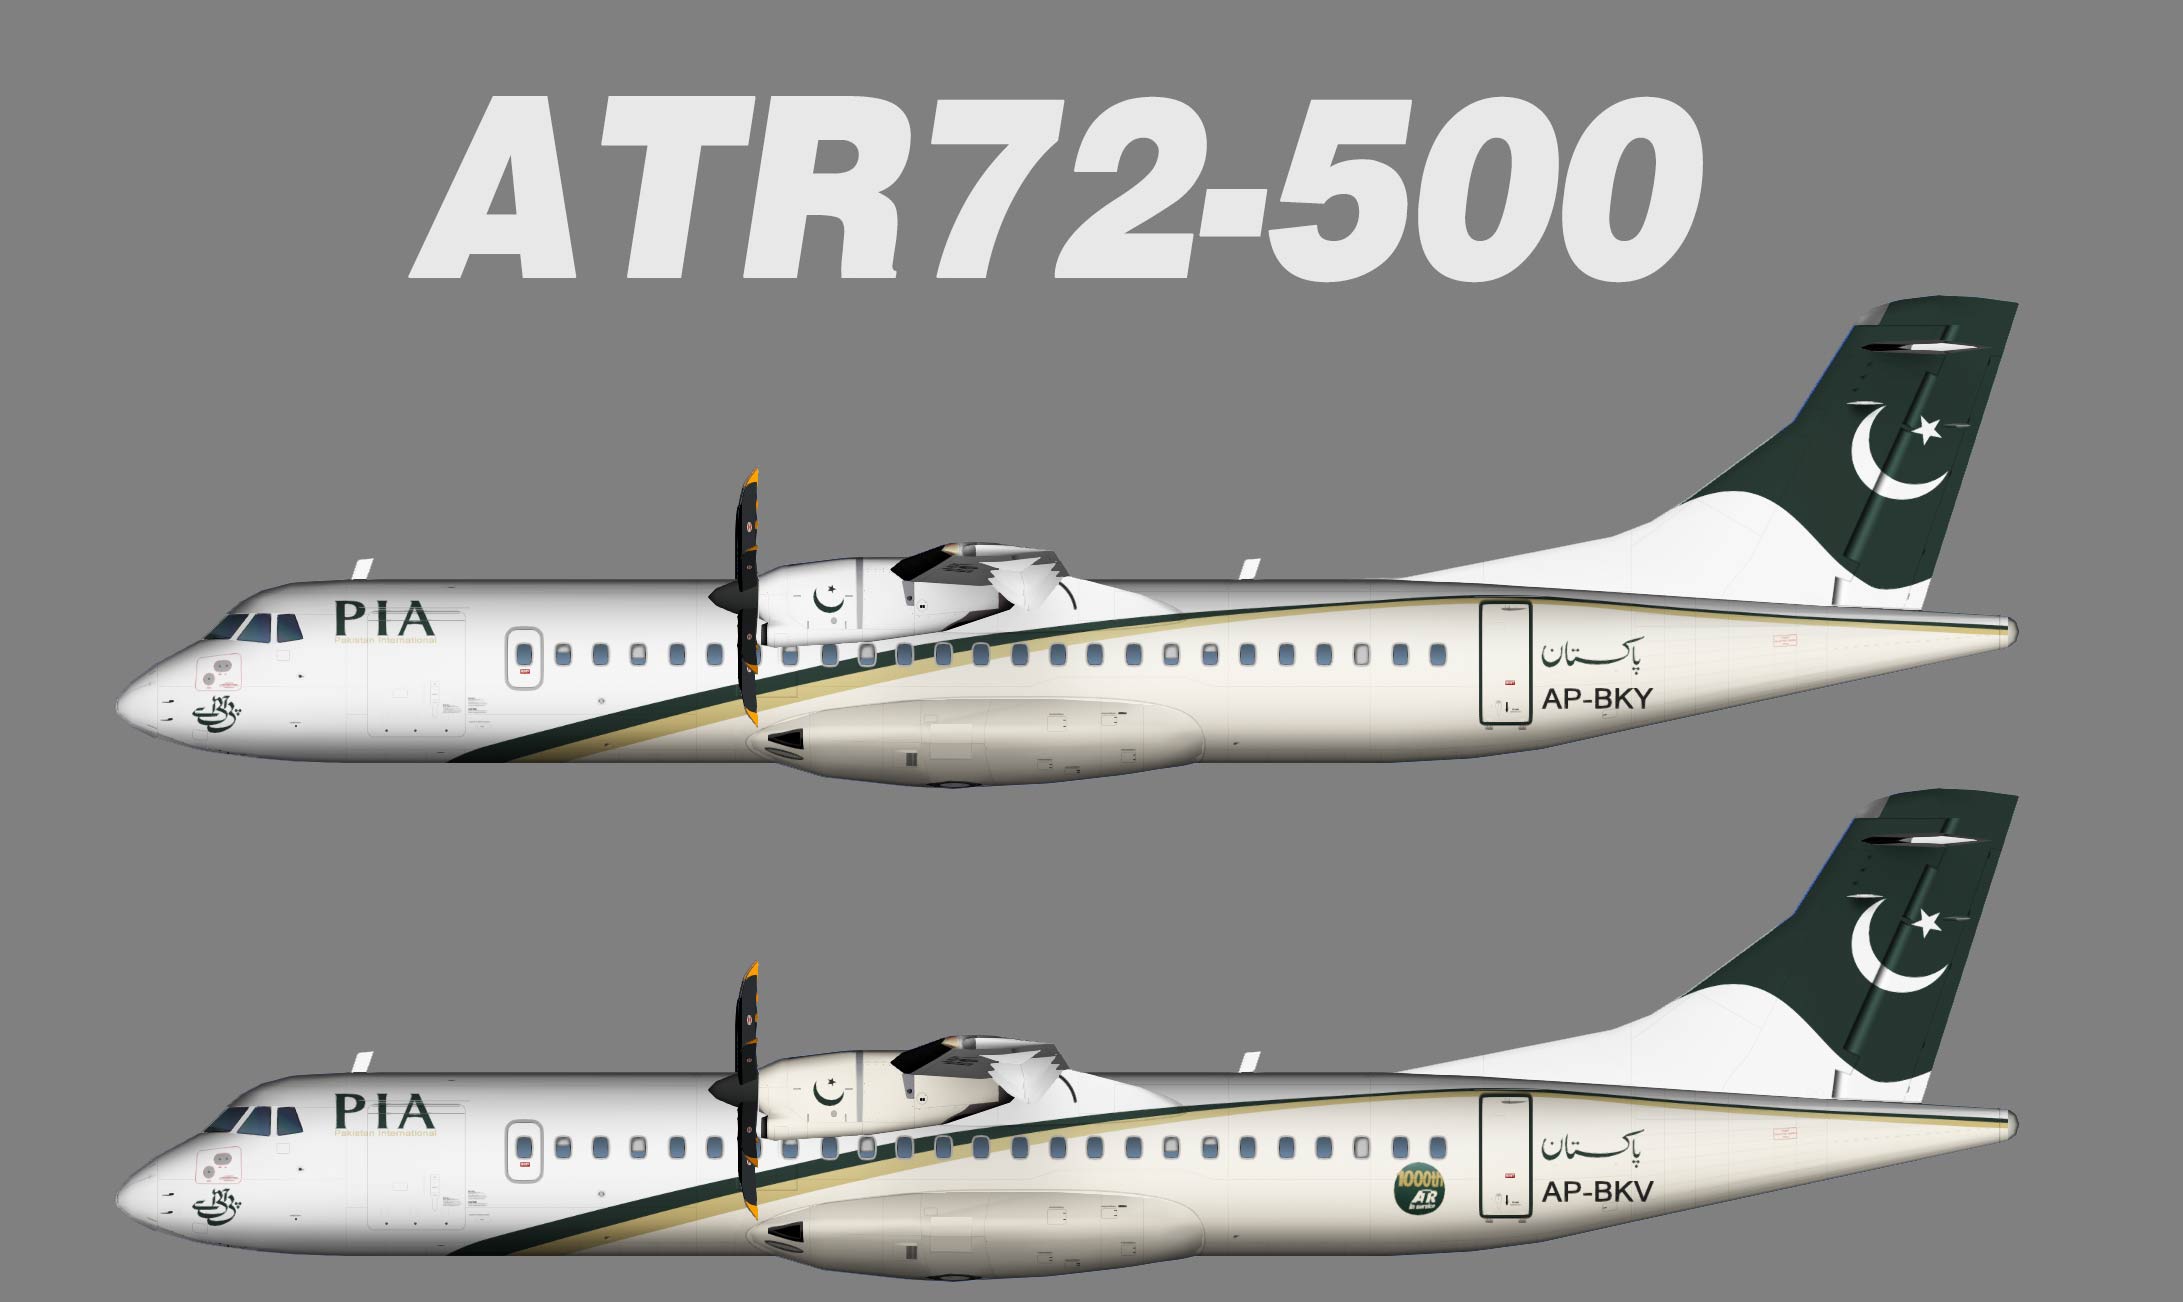 Pakistan International Airlines (PIA) ATR 72-500